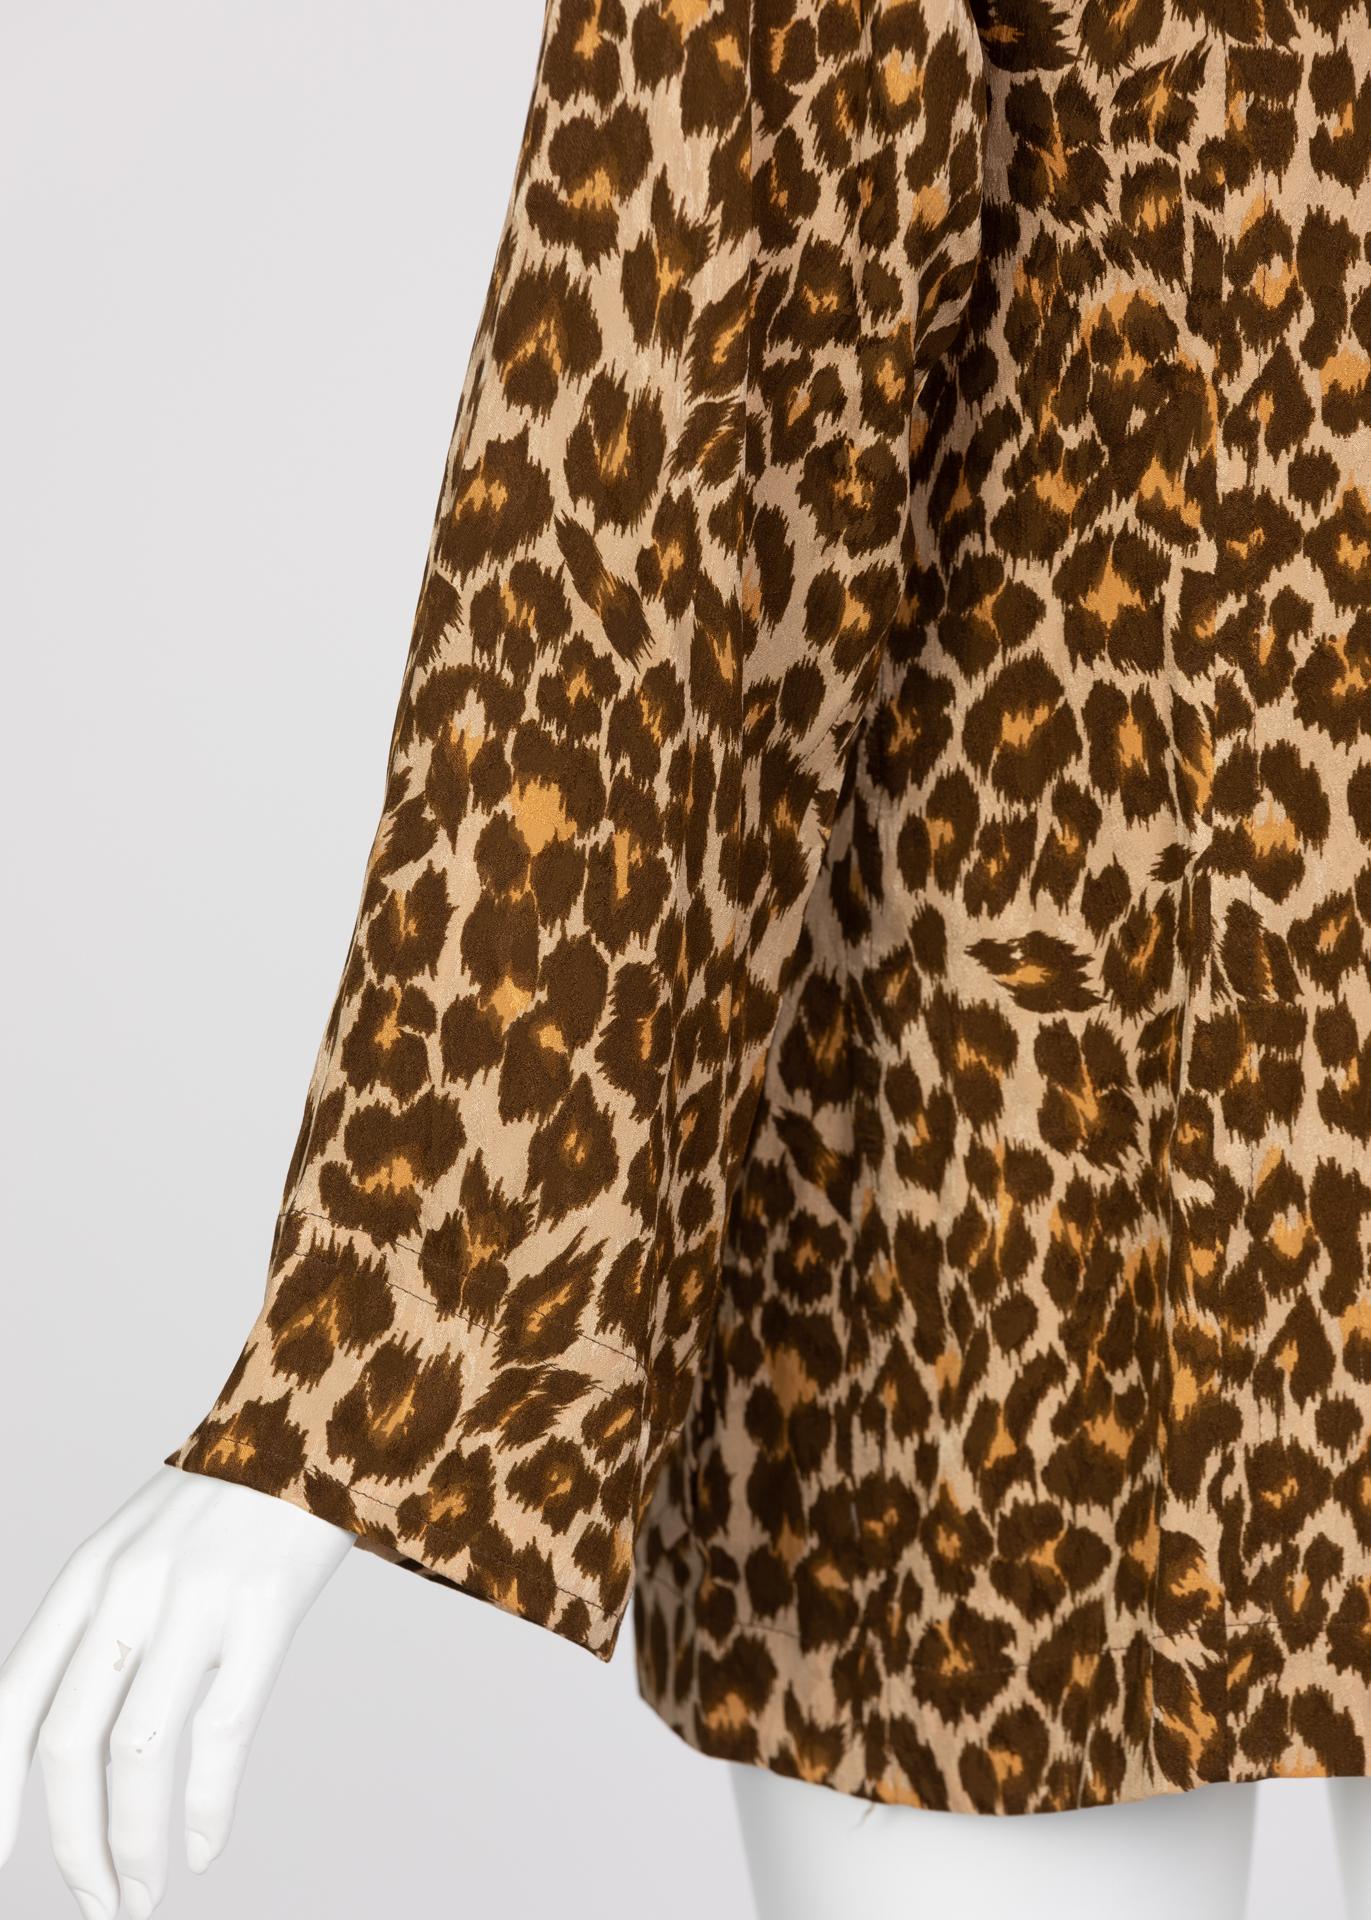 Yves Saint Laurent Leopard Silk Safari Top For Sale 3